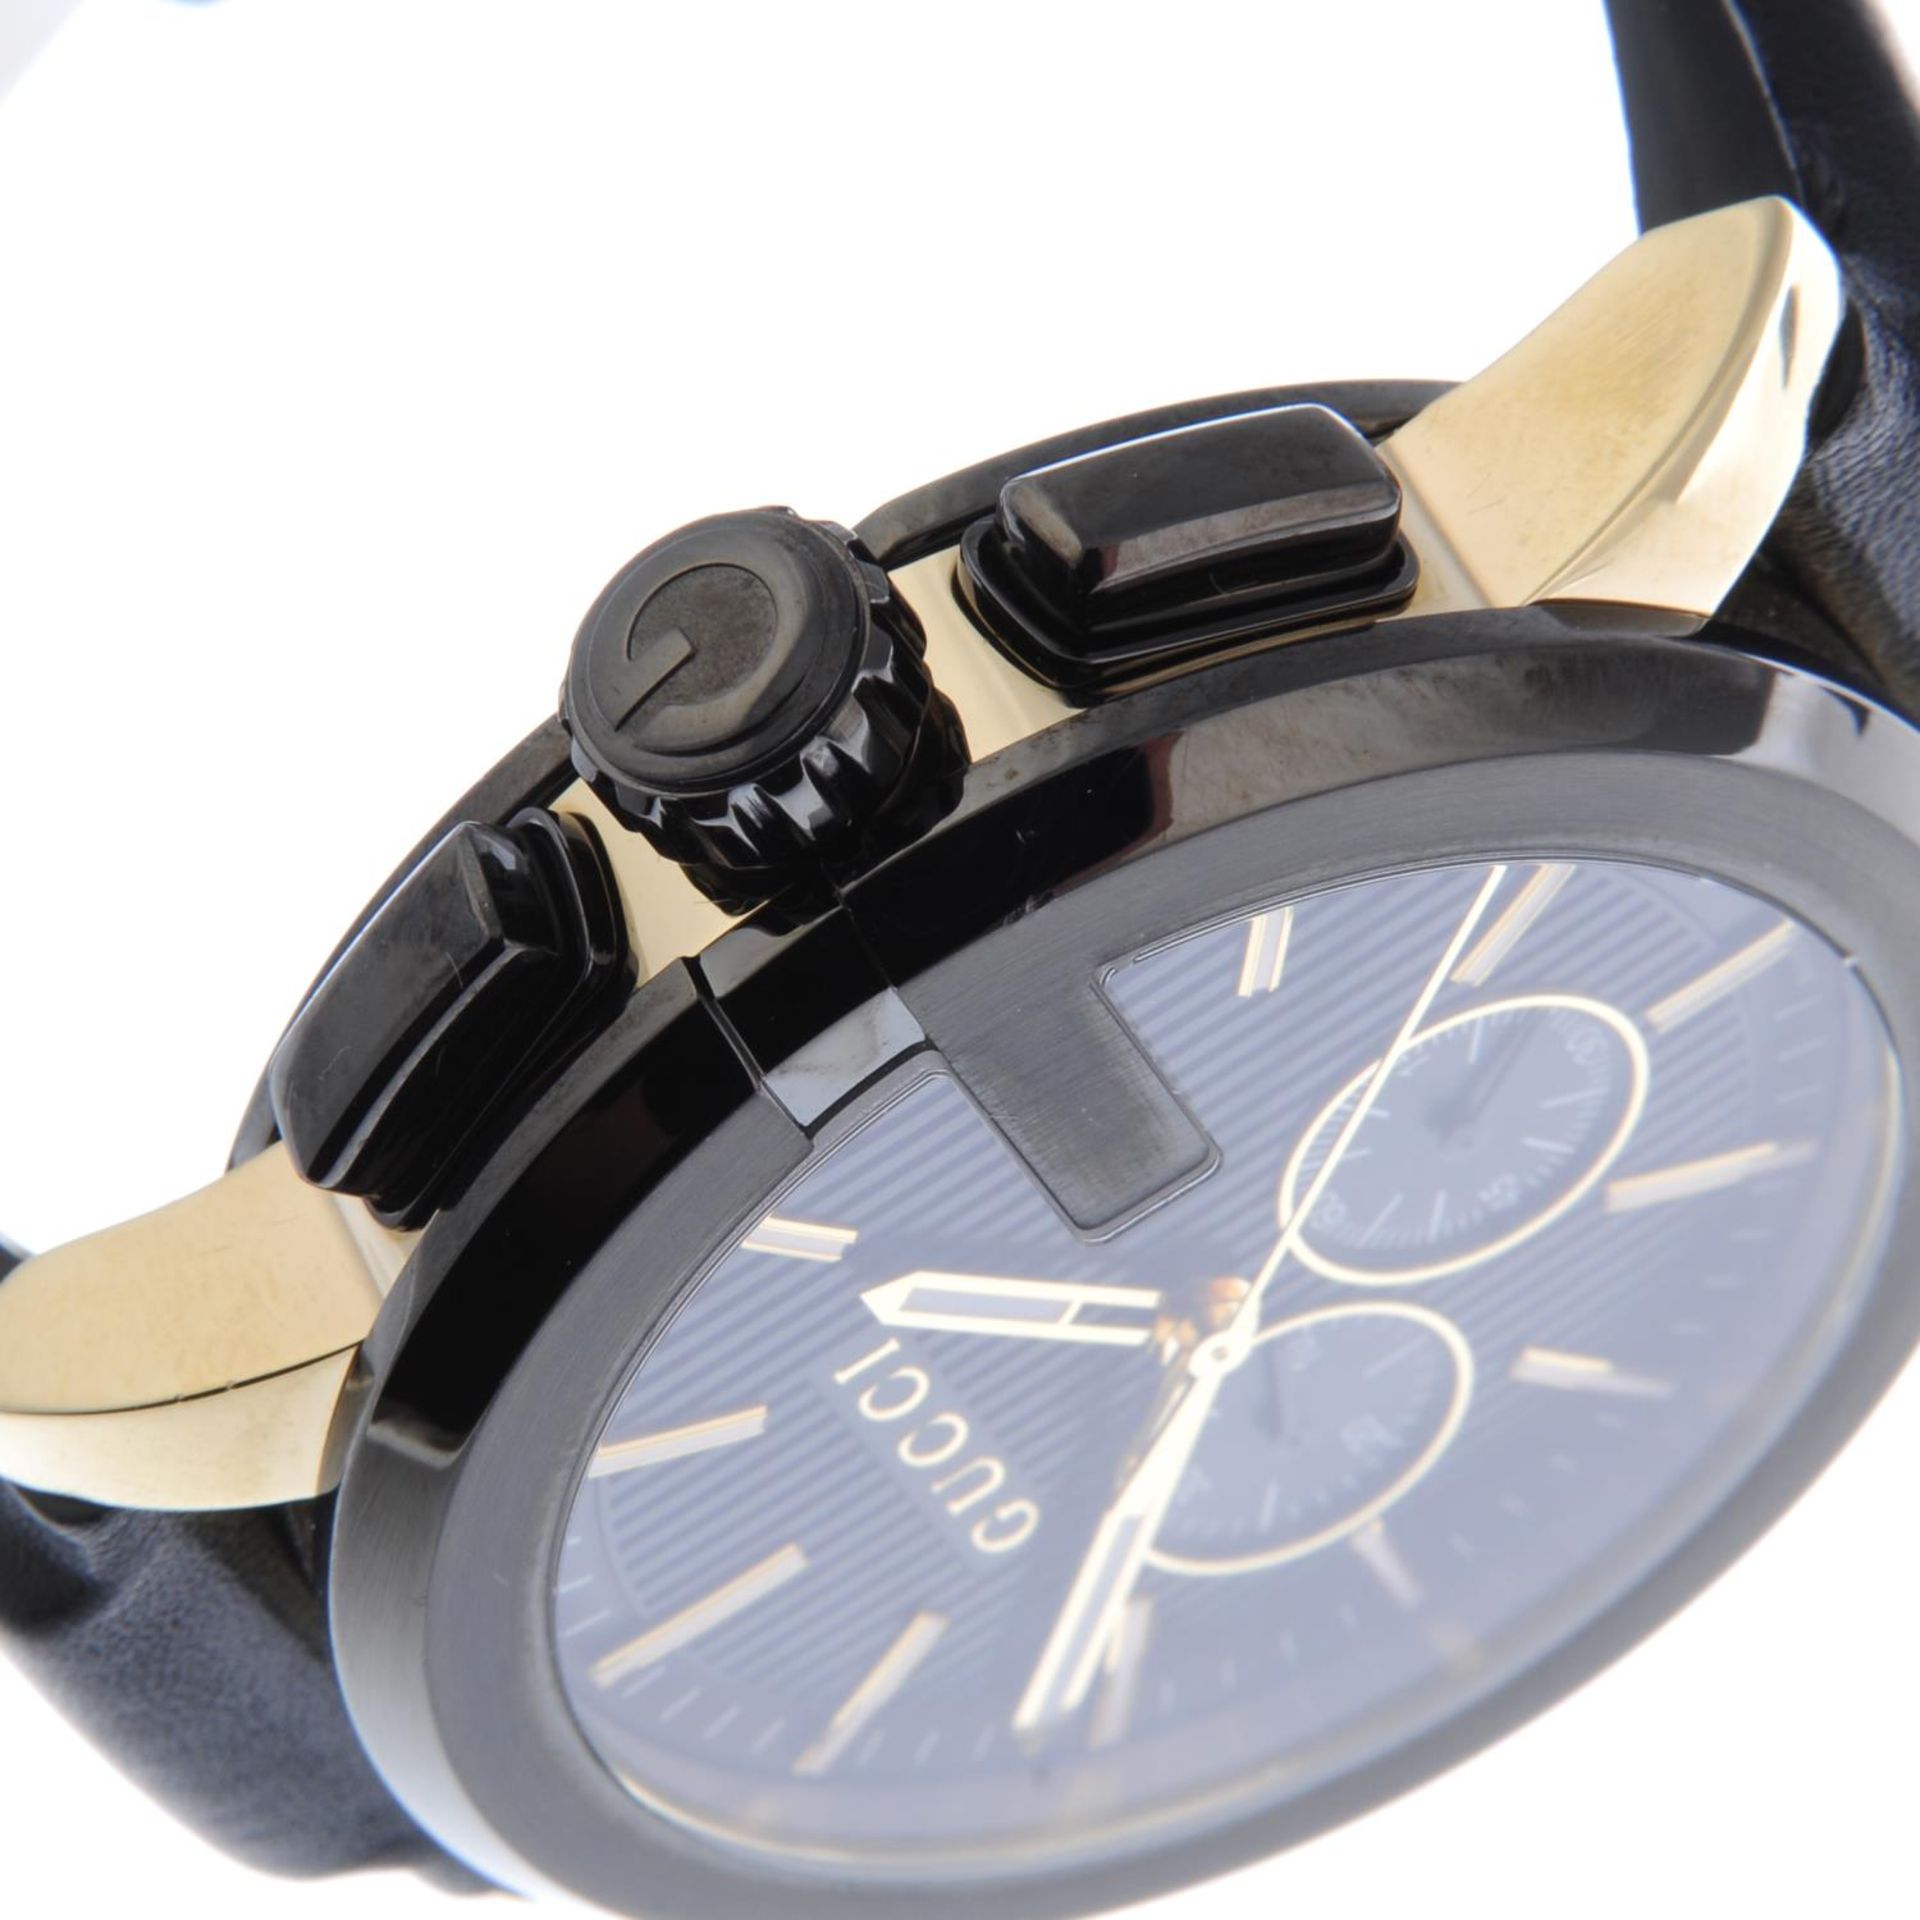 GUCCI - a gentleman's G-Chrono chronograph wrist watch. - Image 4 of 4